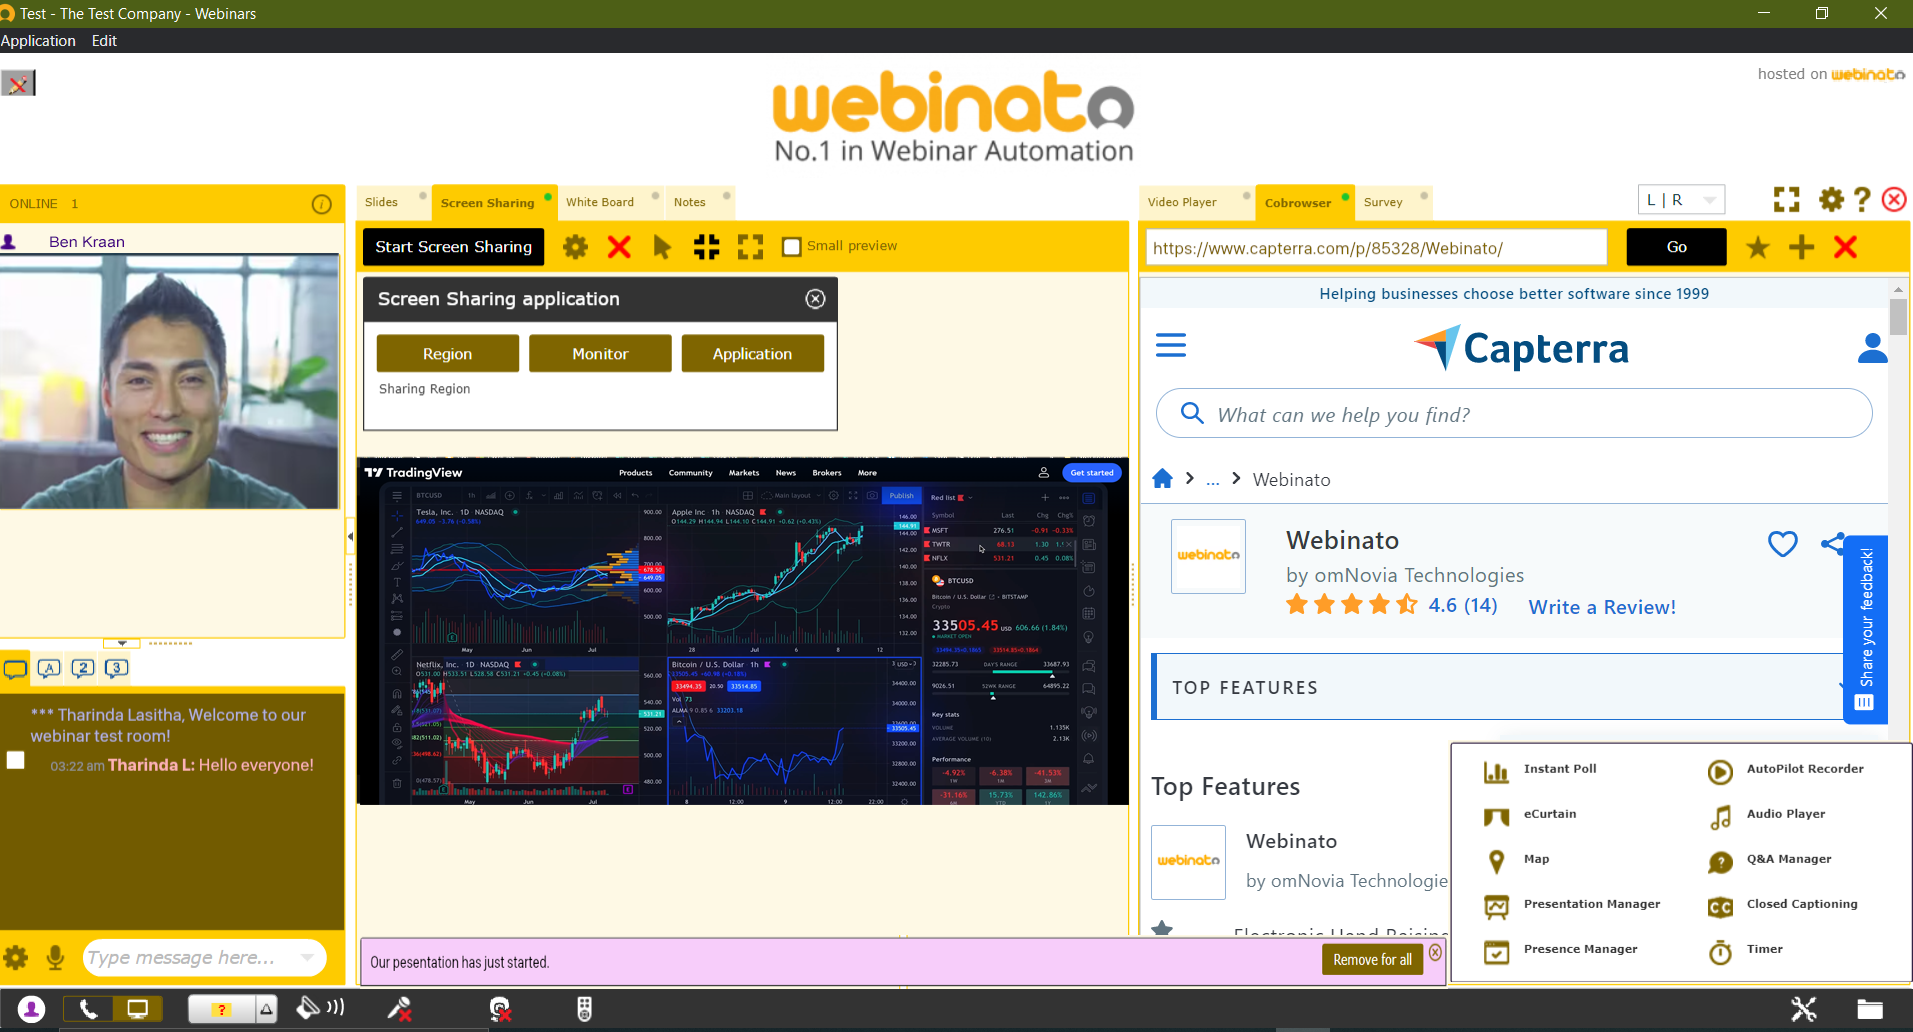 Webinato Webinar Room - Host's View